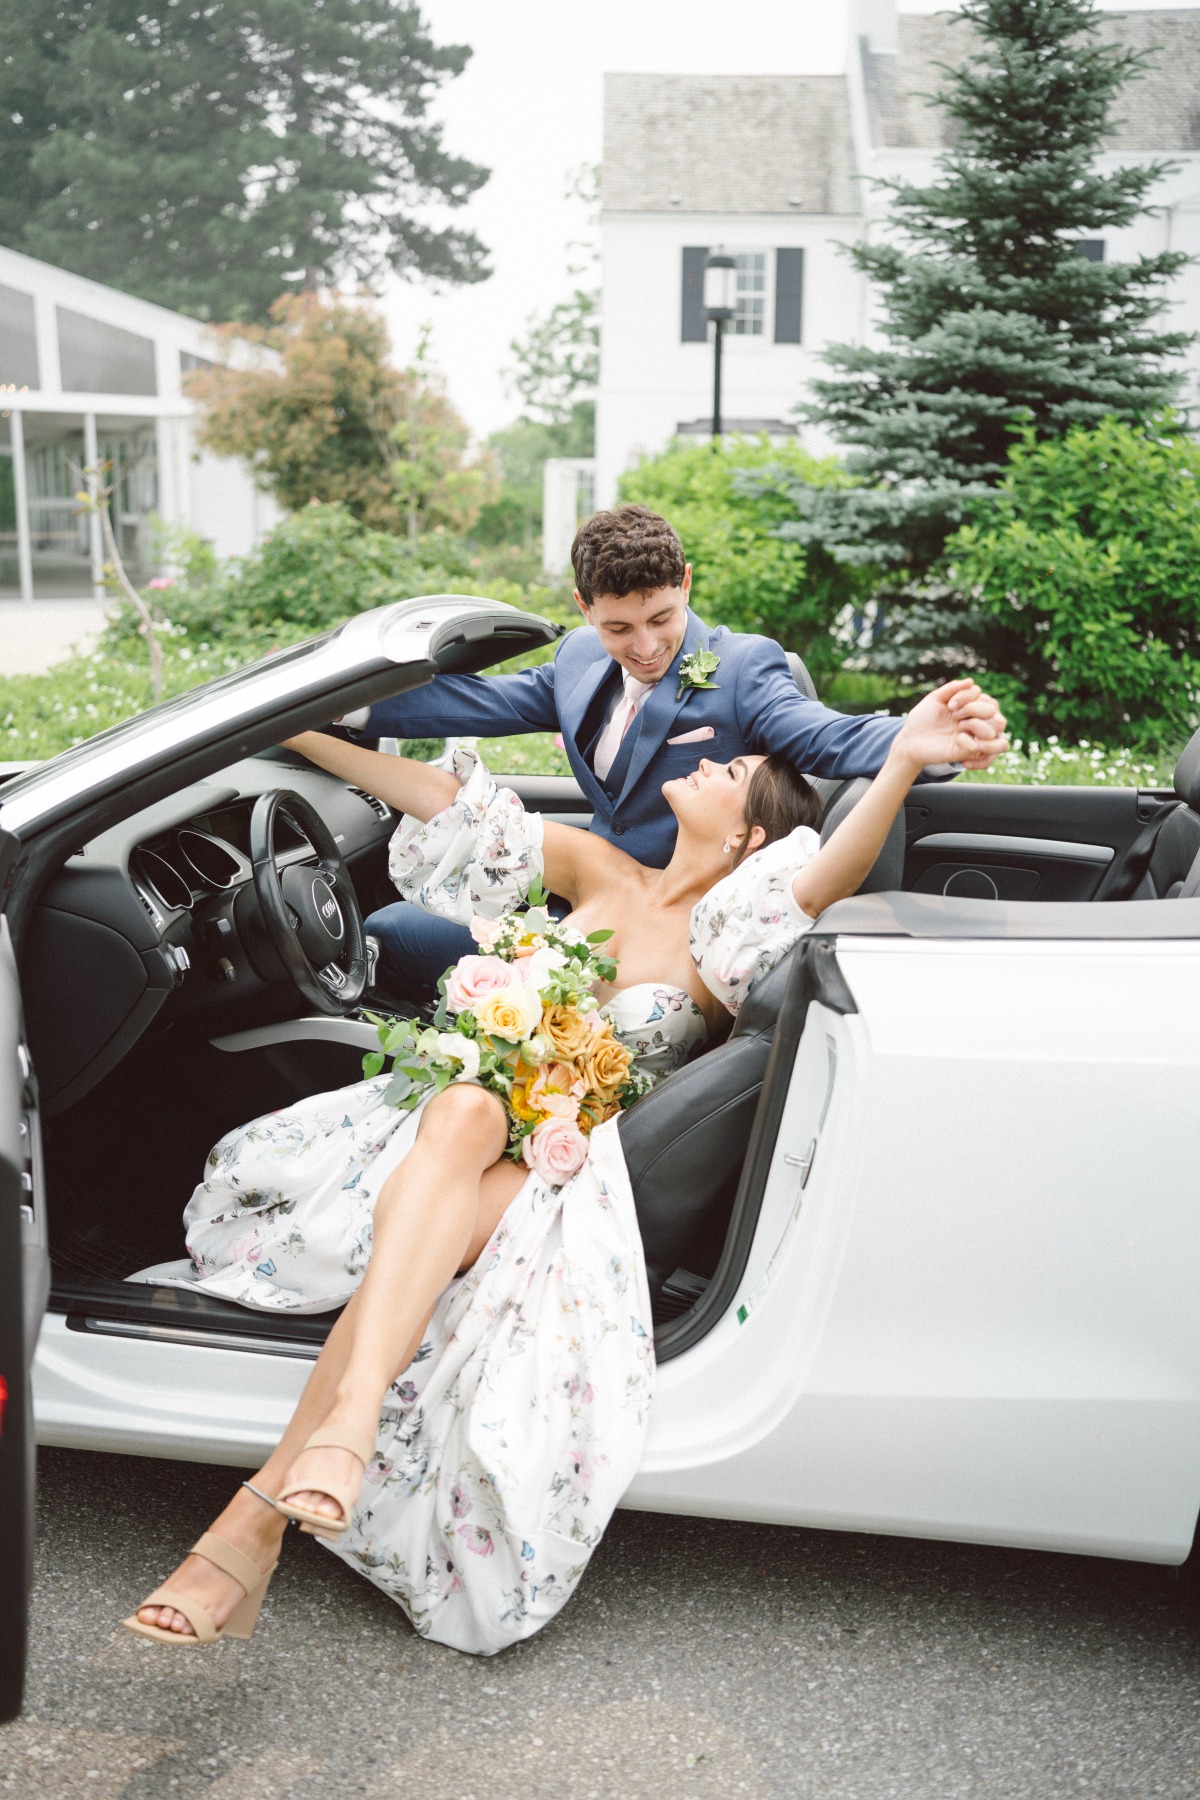 European newlyweds in sports car